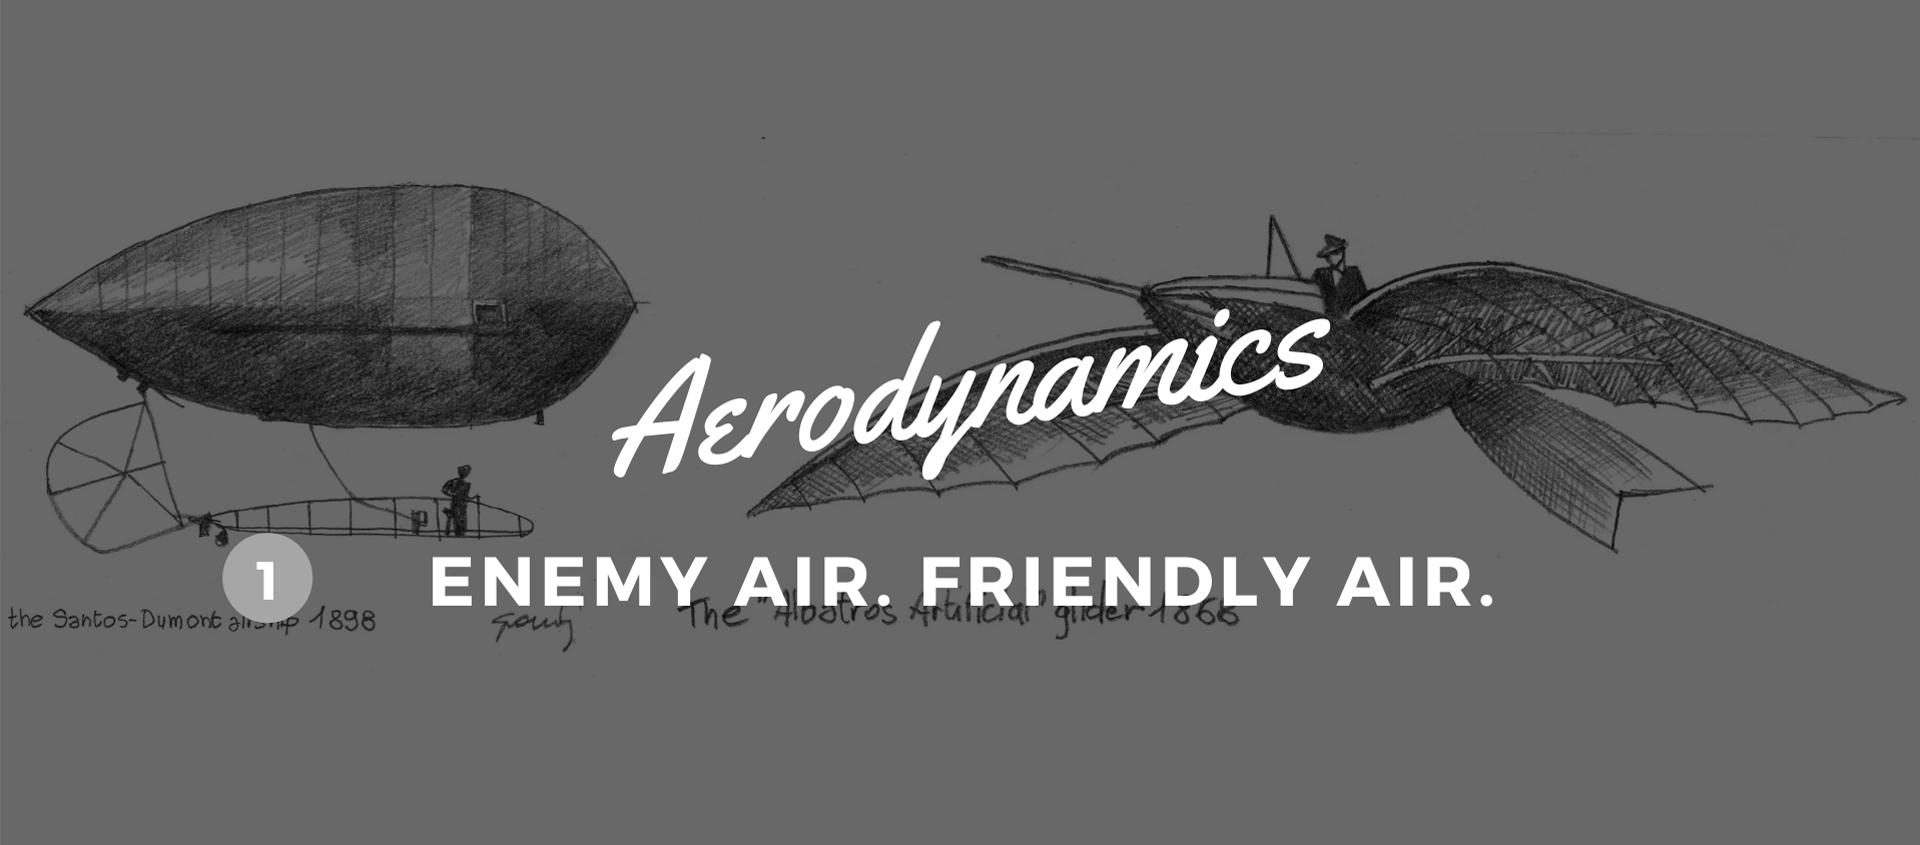 Aerodynamics. Over 100 years of evolution.